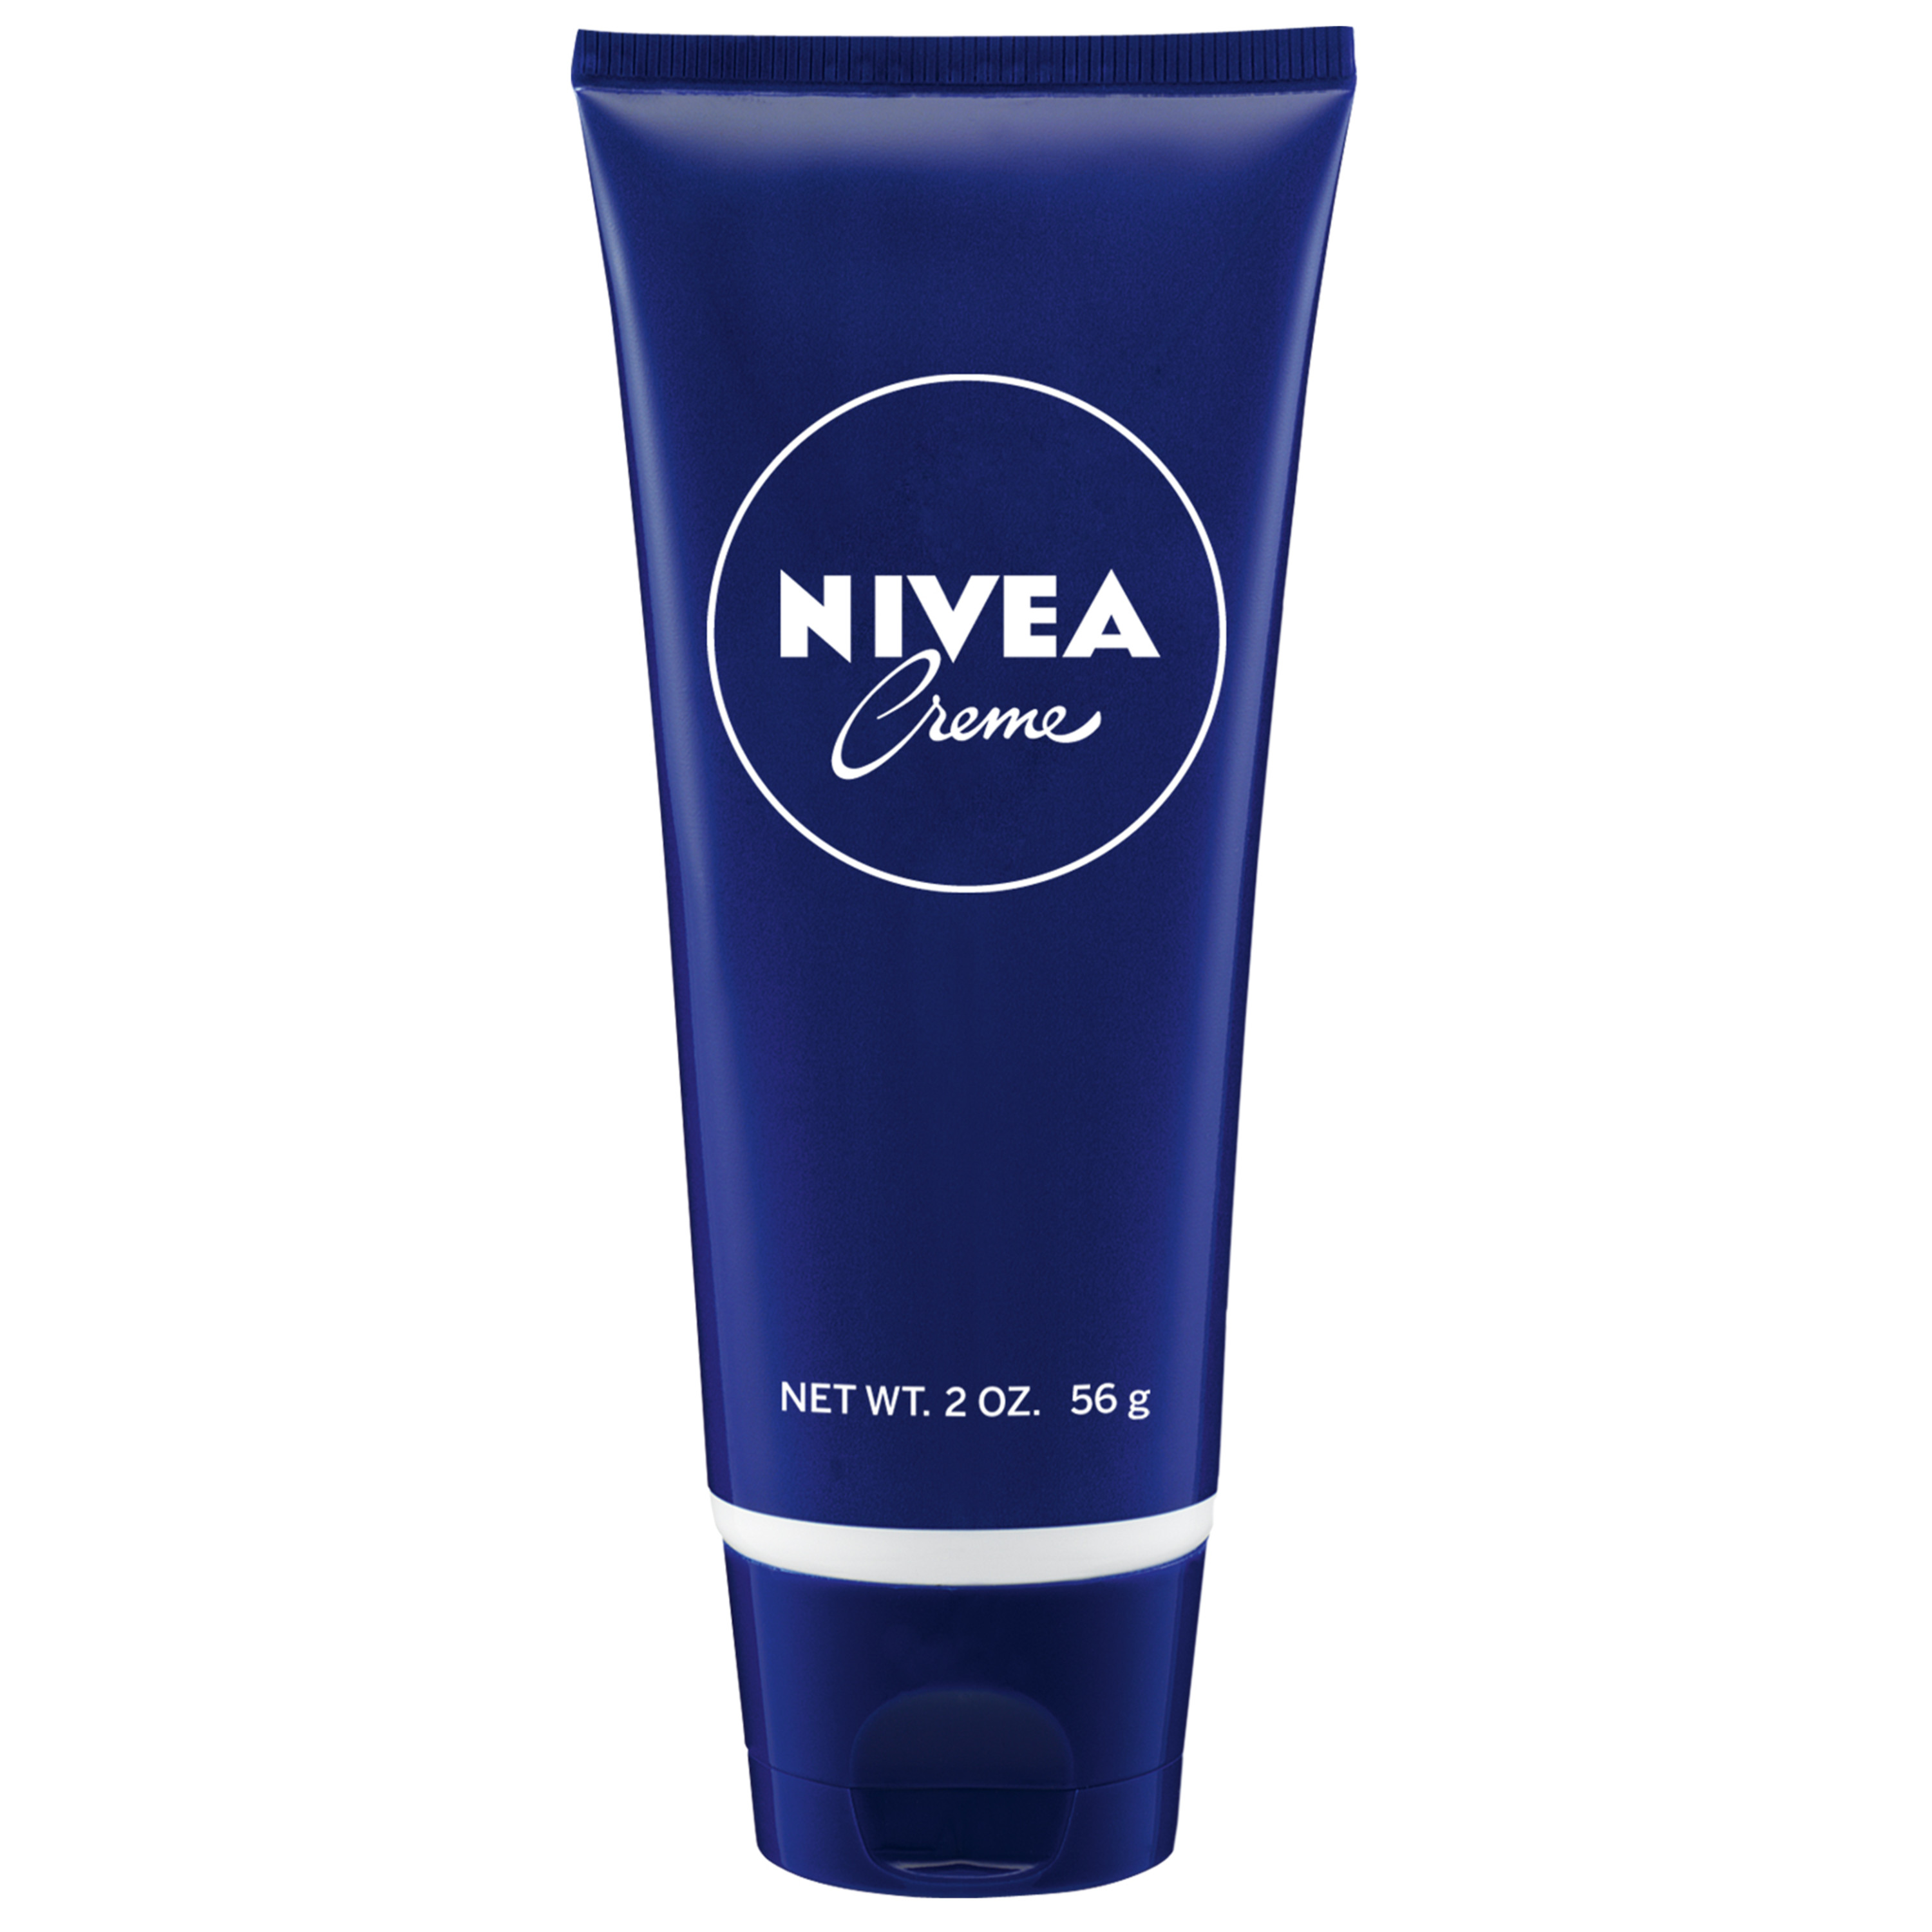 NIVEA Creme Body, Face and Hand Moisturizing Cream, 2 Oz Tube - image 1 of 11